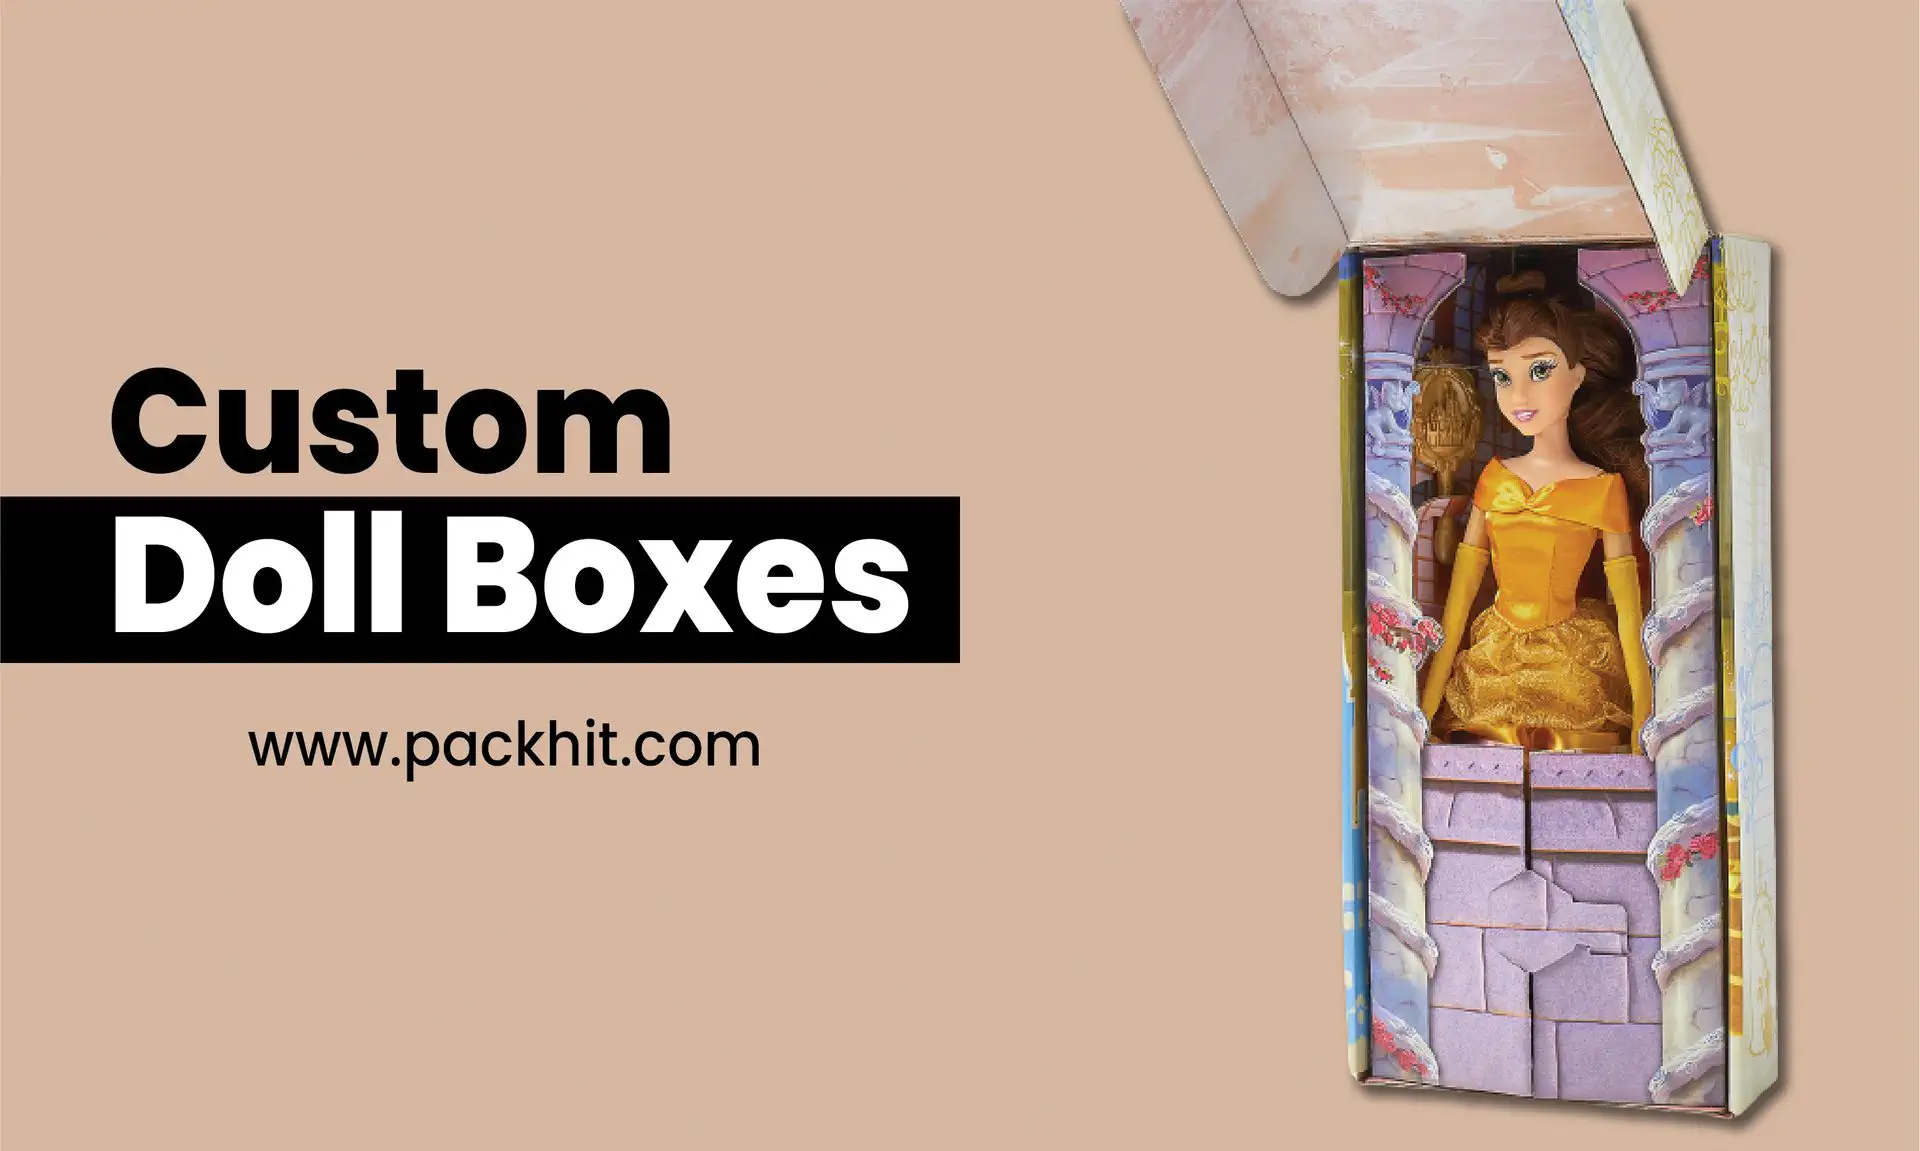  Custom Doll Boxes